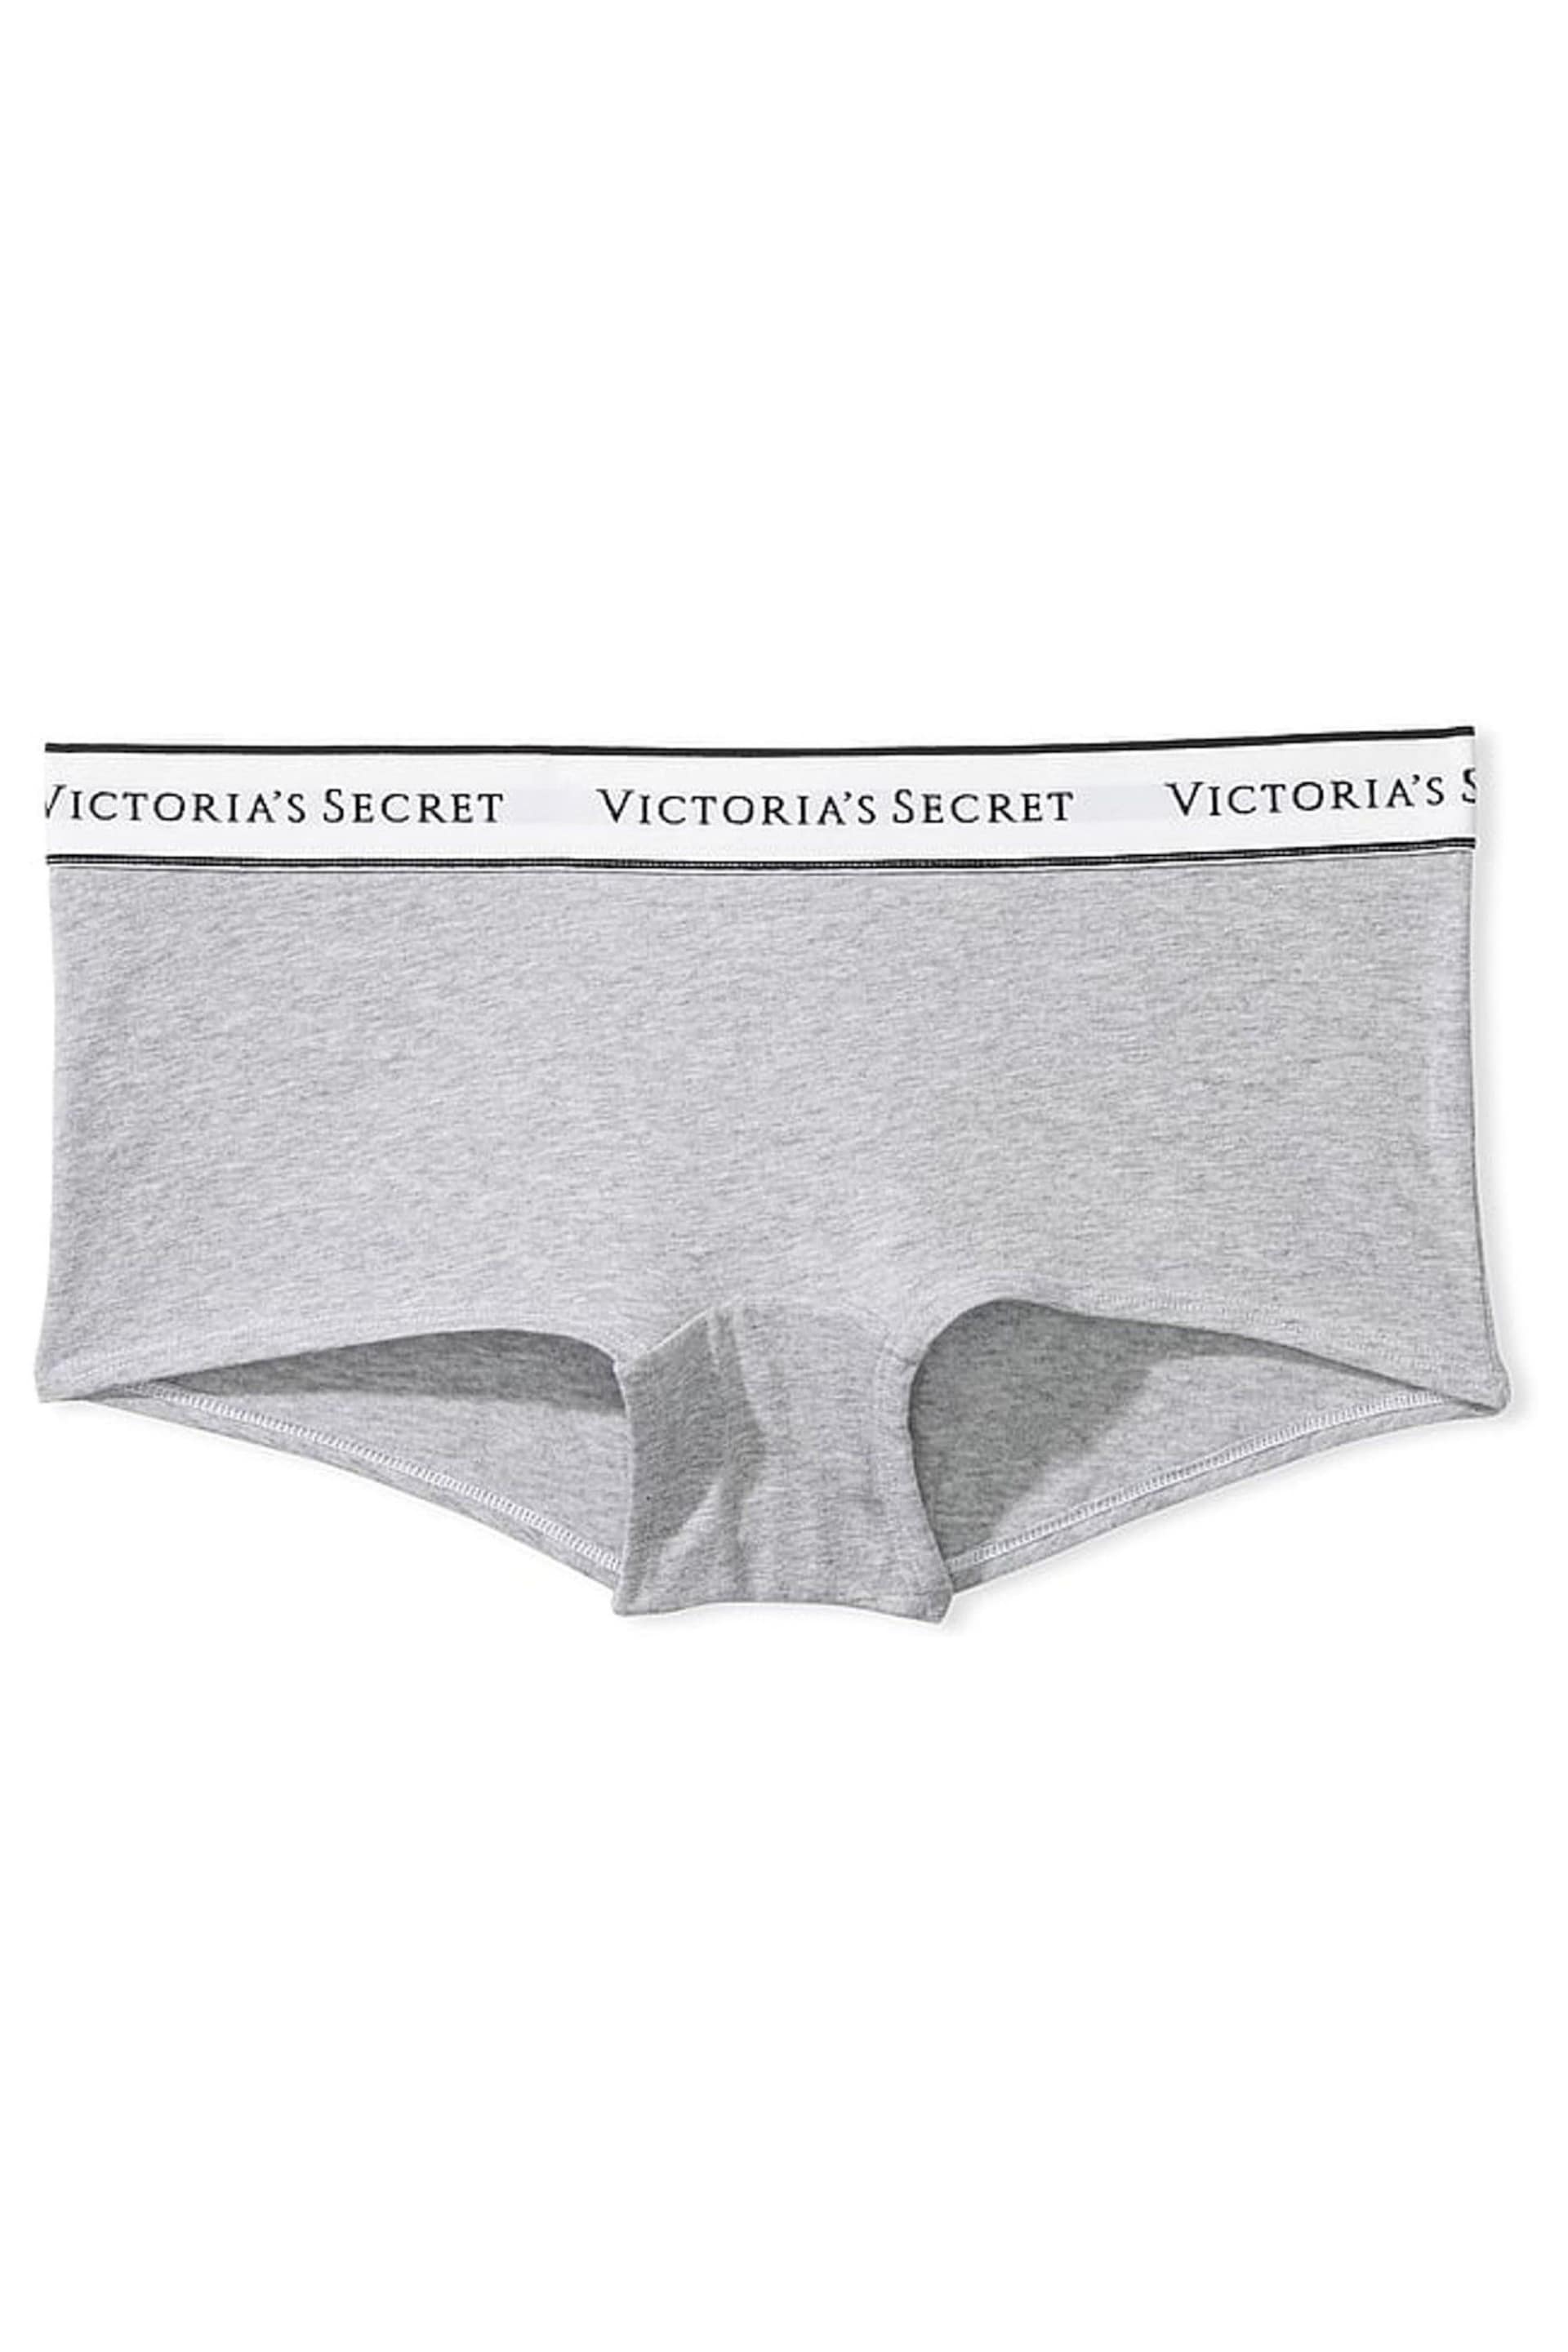 Victoria's Secret Heather Grey Short Logo Knickers - Image 3 of 3